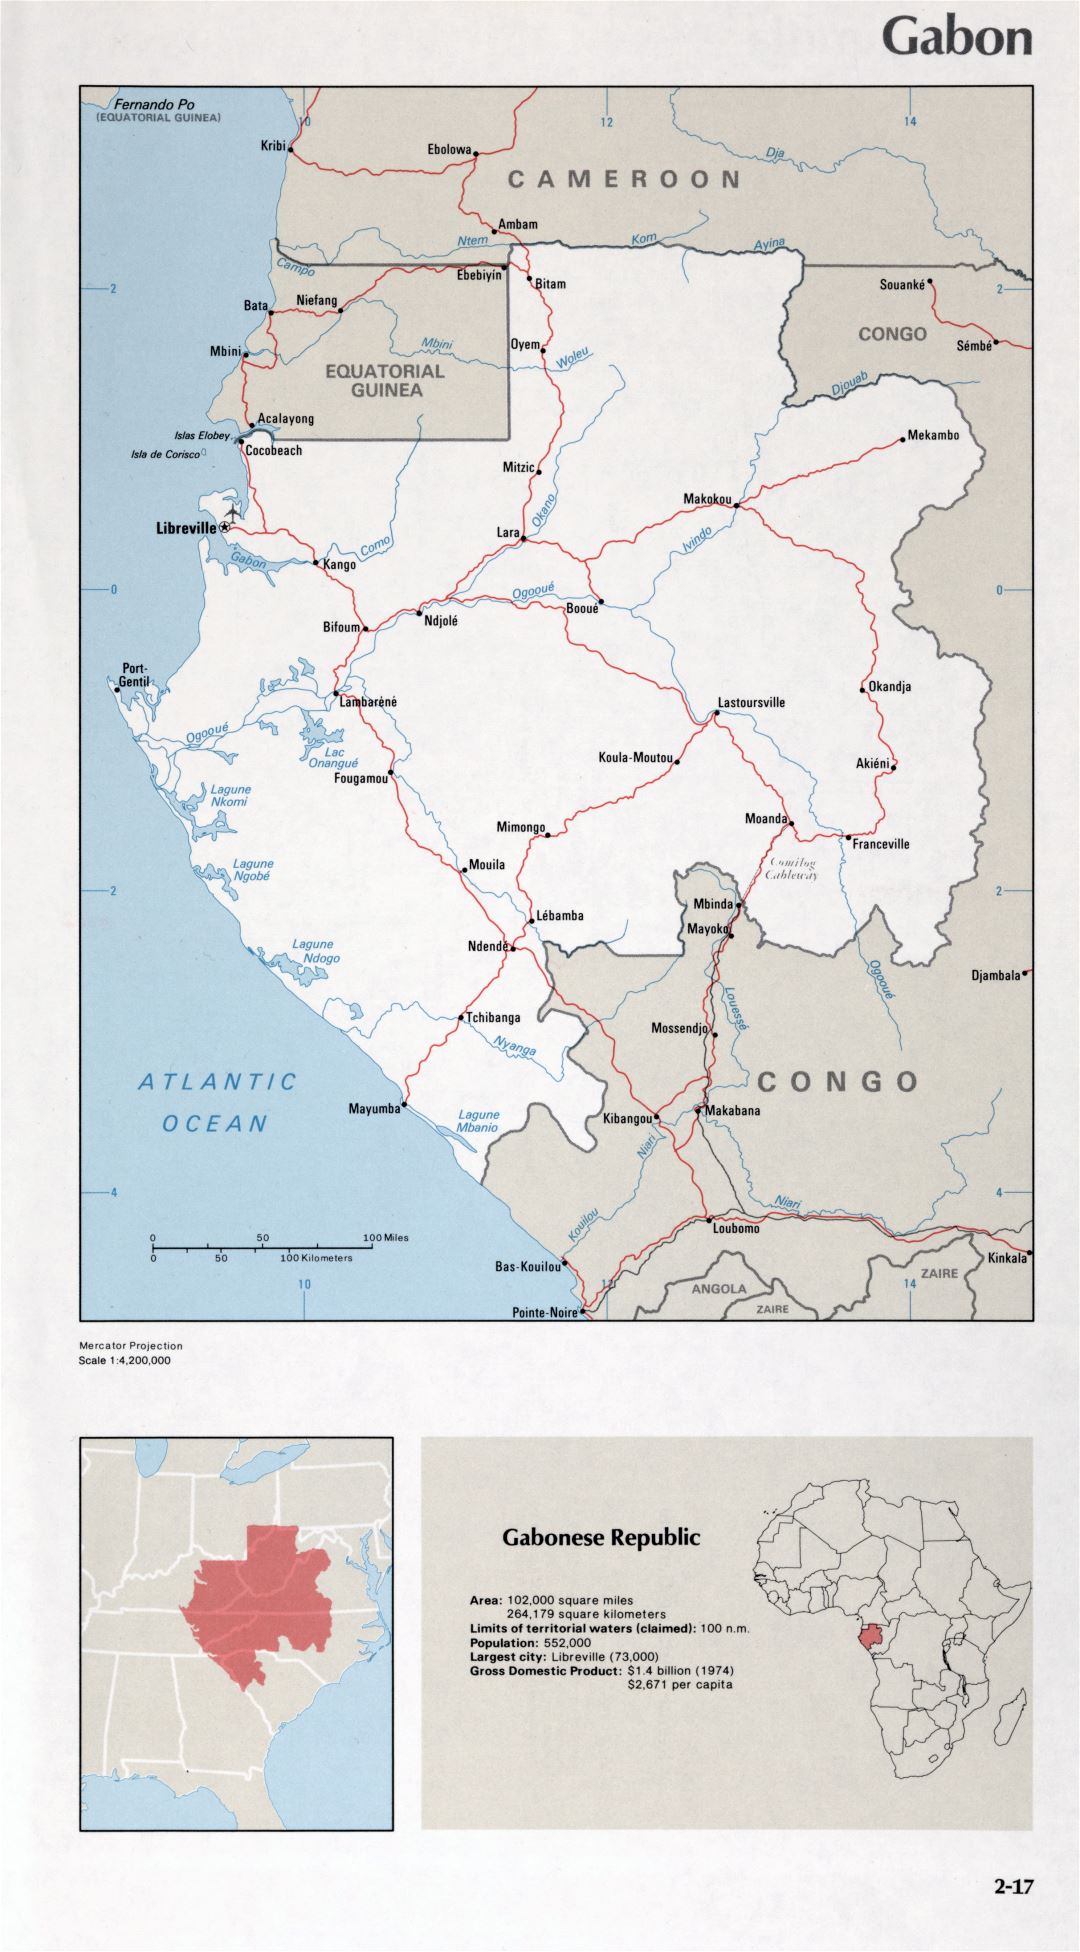 Map of Gabon (2-17)